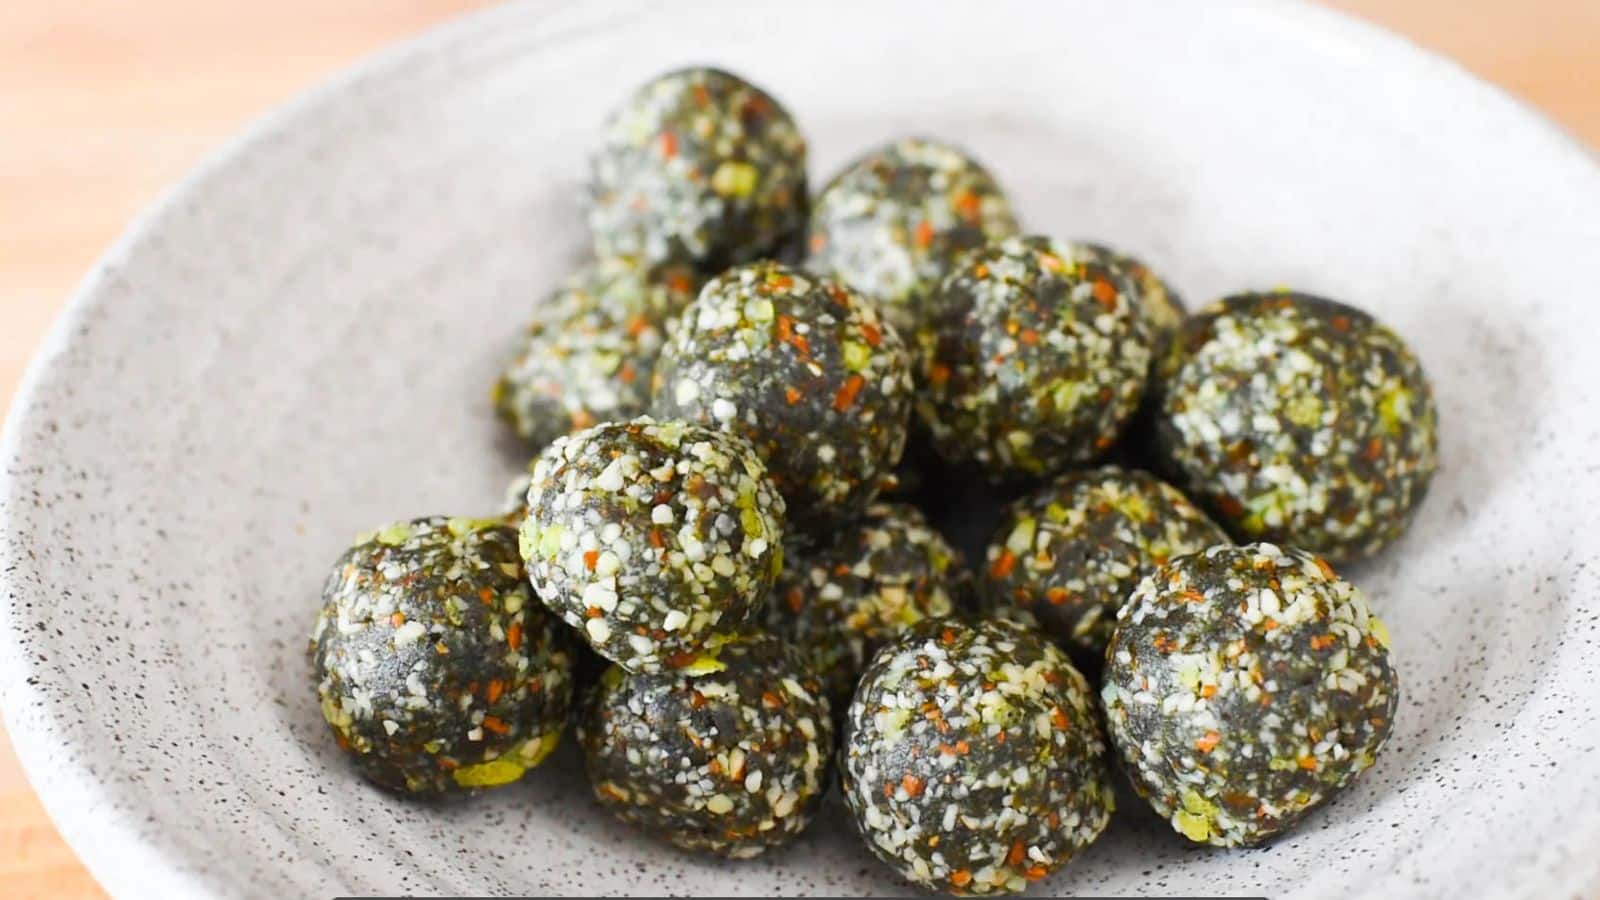 Prepare delicious spirulina energy balls with this recipe